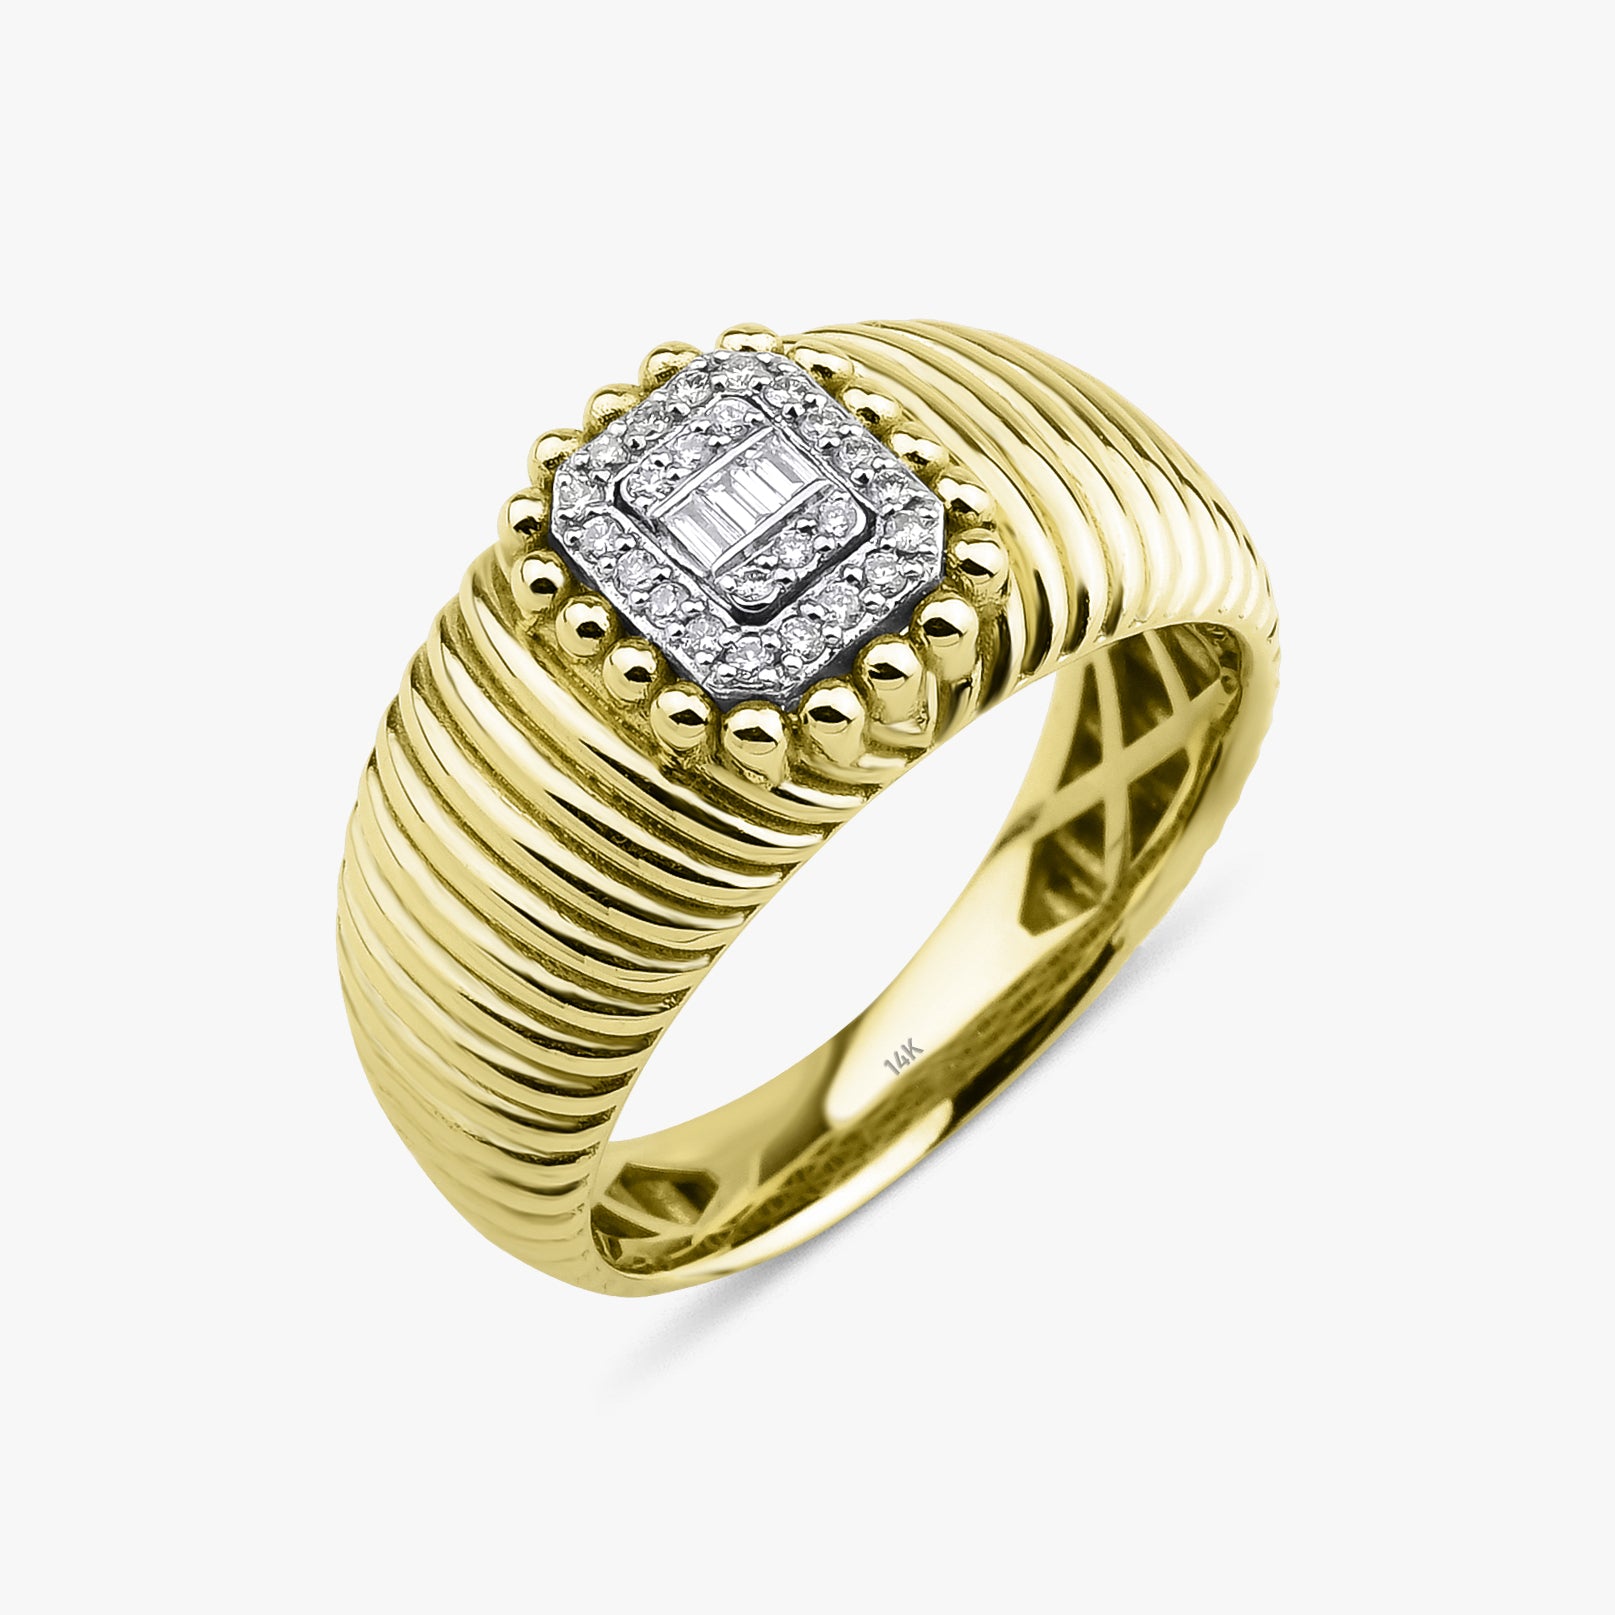 Textured Diamond Ring in 14K Gold